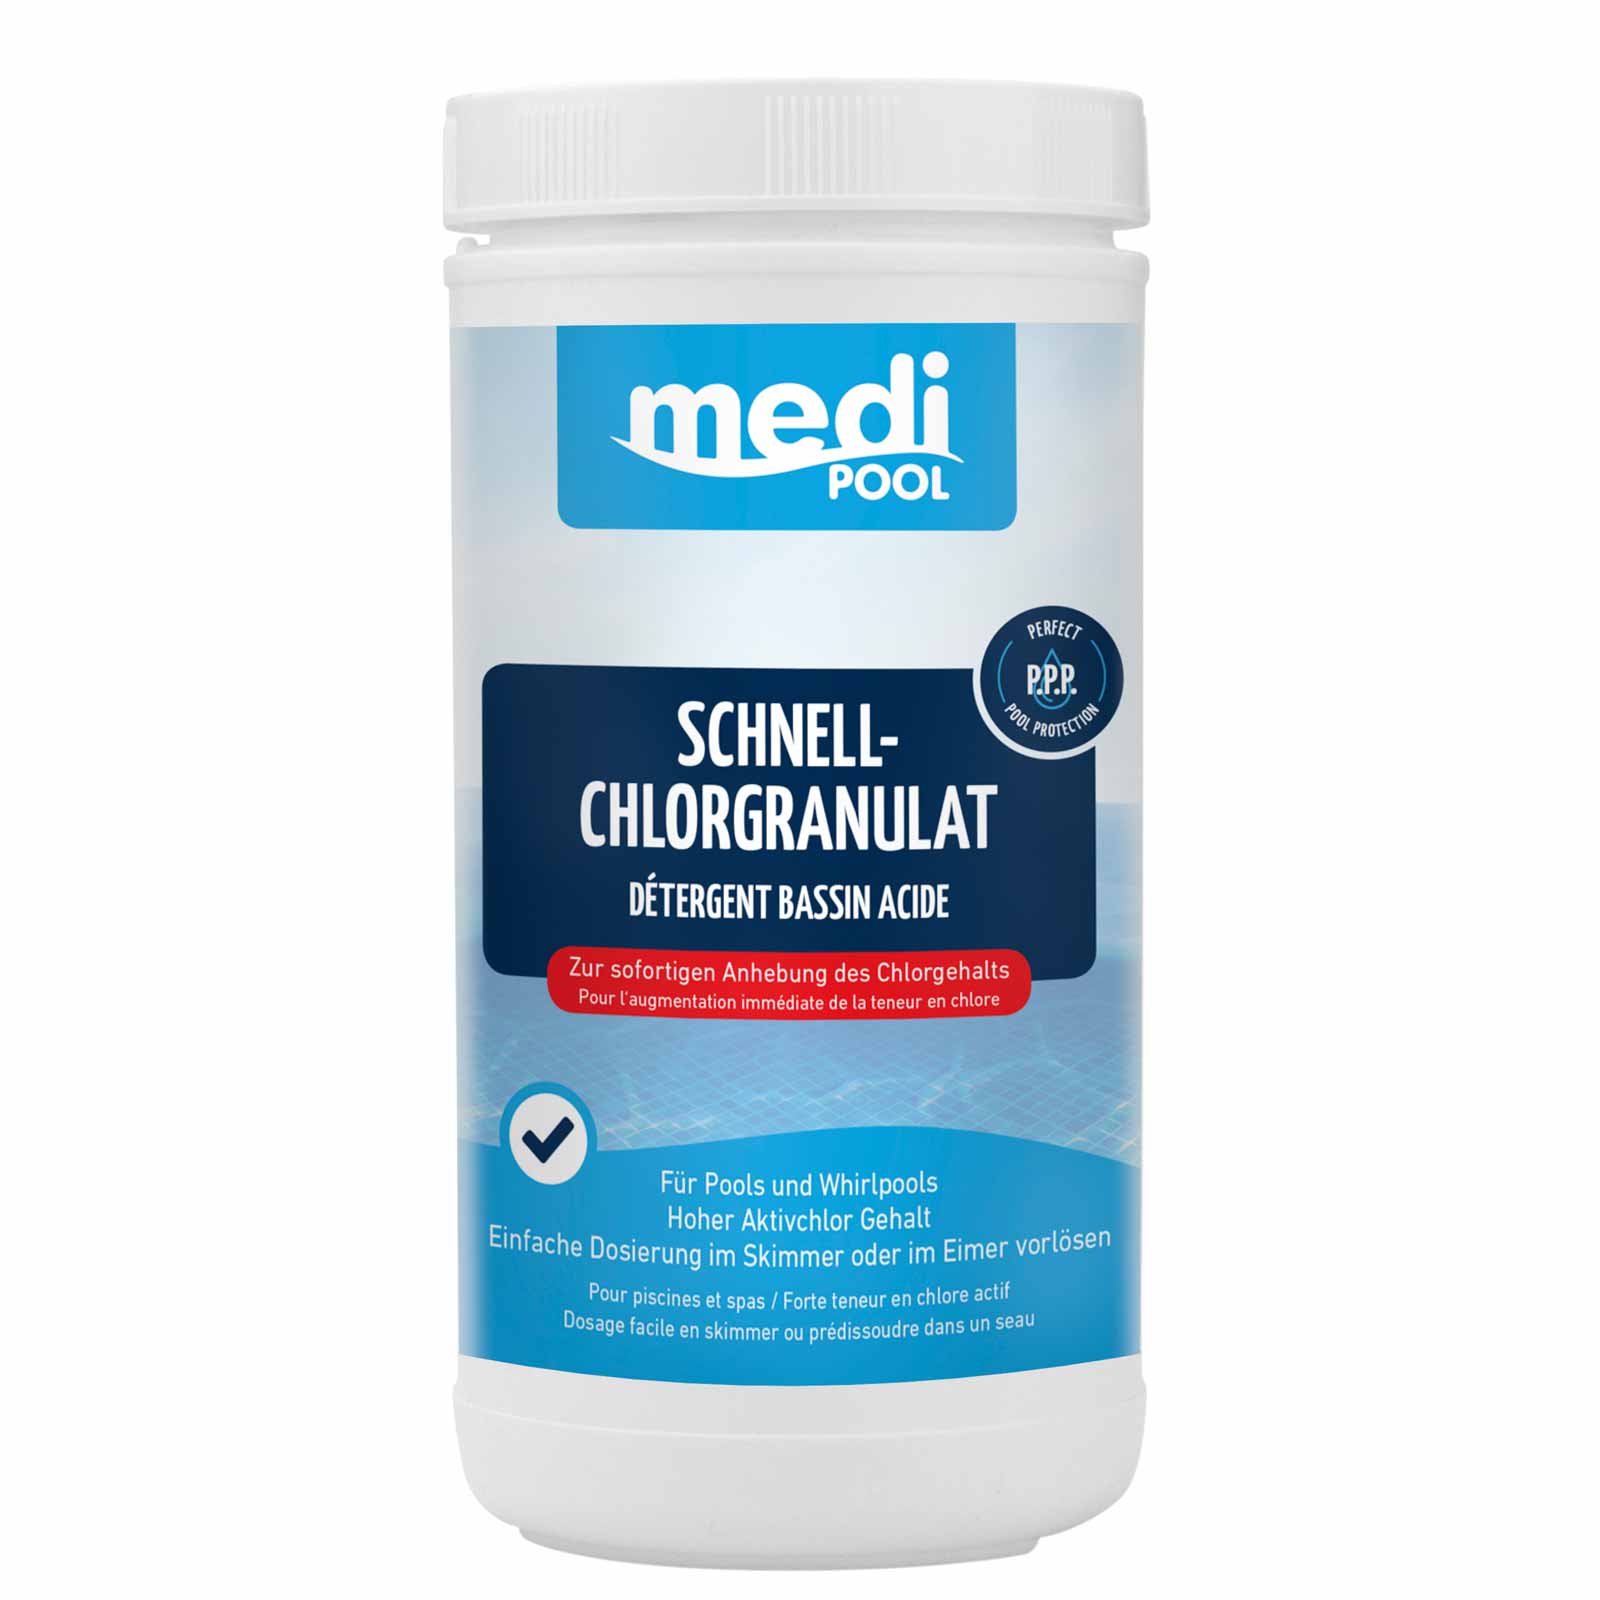 mediPOOL SchnellChlor Granulat Chlorgranulat Aktivchlor Poolreinigung Poolpflege Inhalt:1 kg von mediPOOL